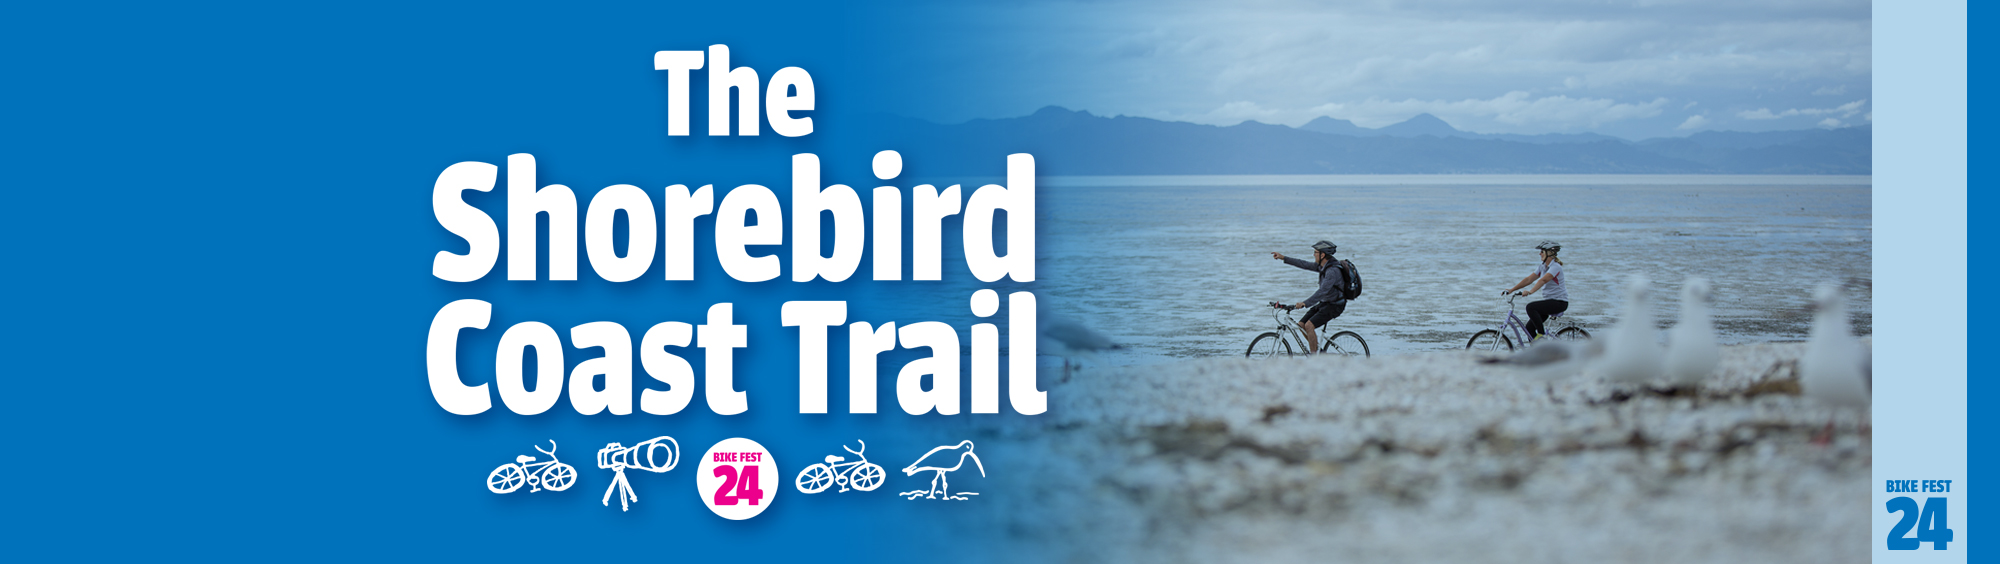 The Shorebird Coast Trail 